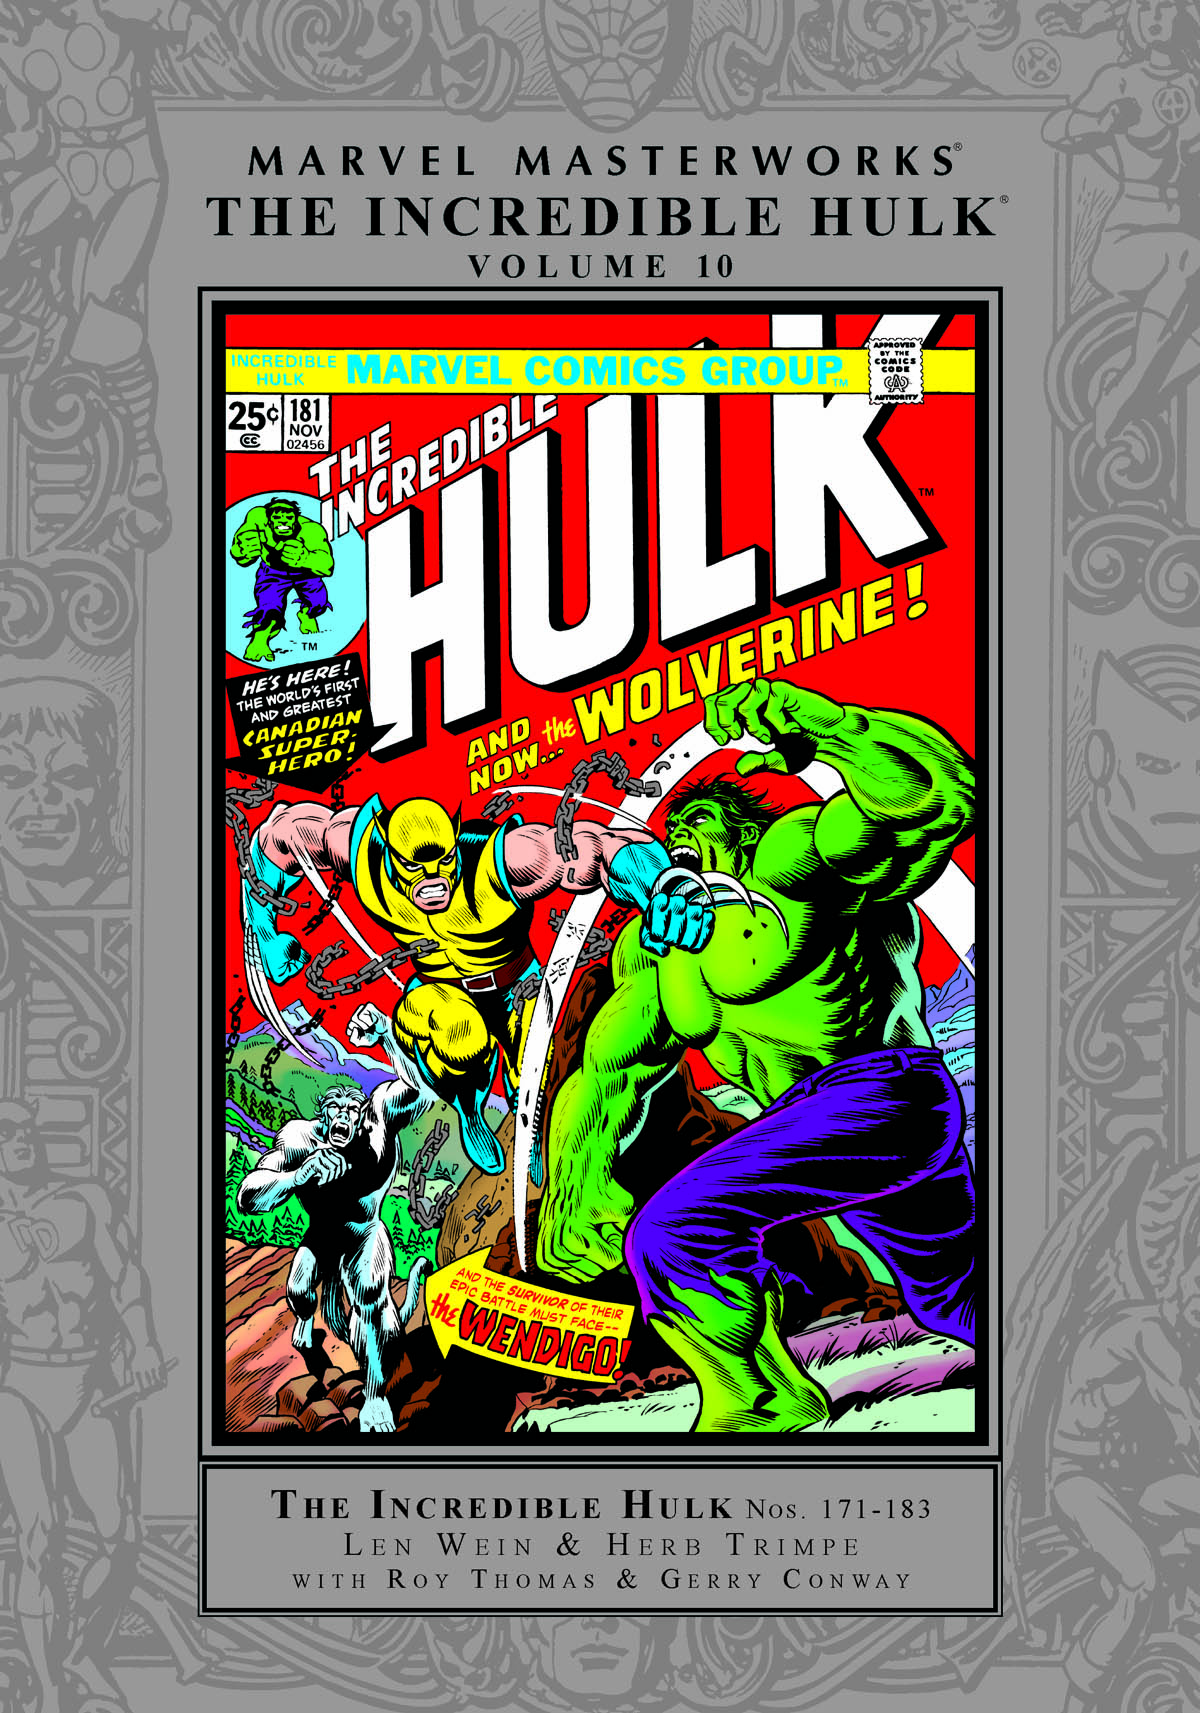 Marvel Masterworks: The Incredible Hulk Vol. 10 (Trade Paperback)